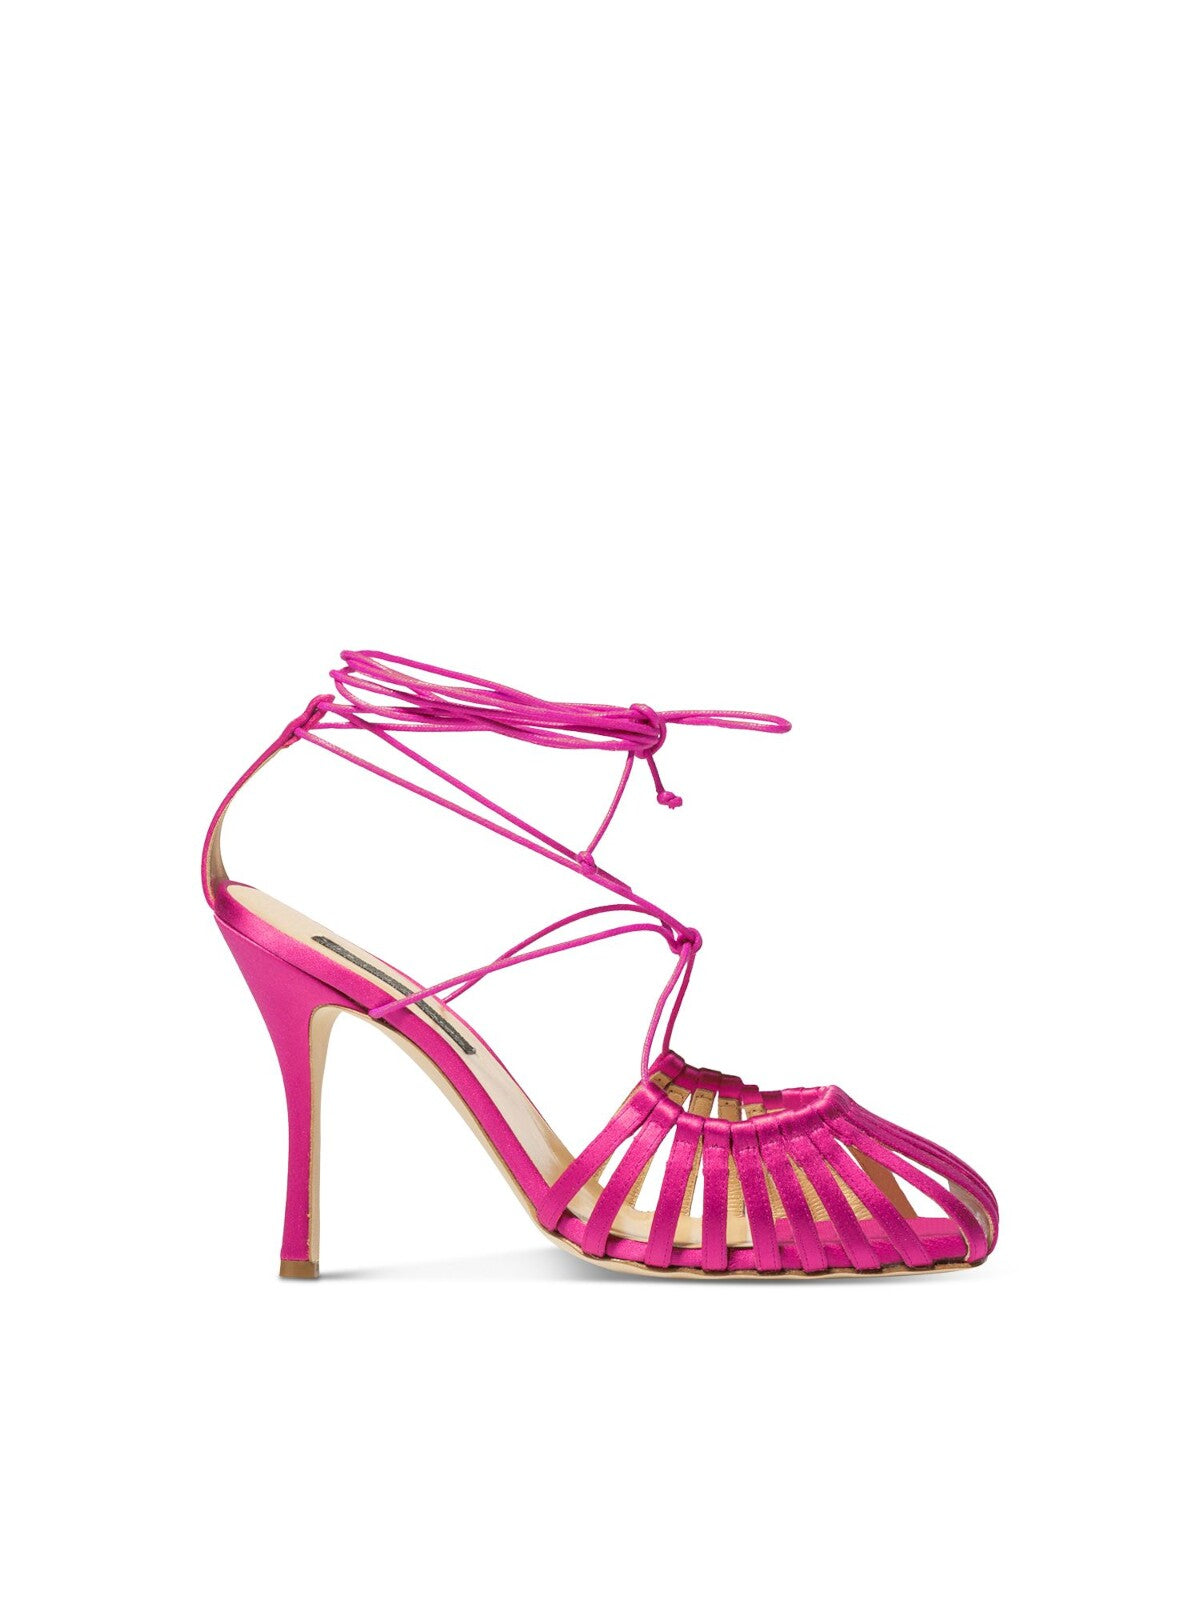 CHELSEA PARIS Womens Pink Strappy Finn Open Toe Stiletto Lace-Up Leather Dress Pumps Shoes 38